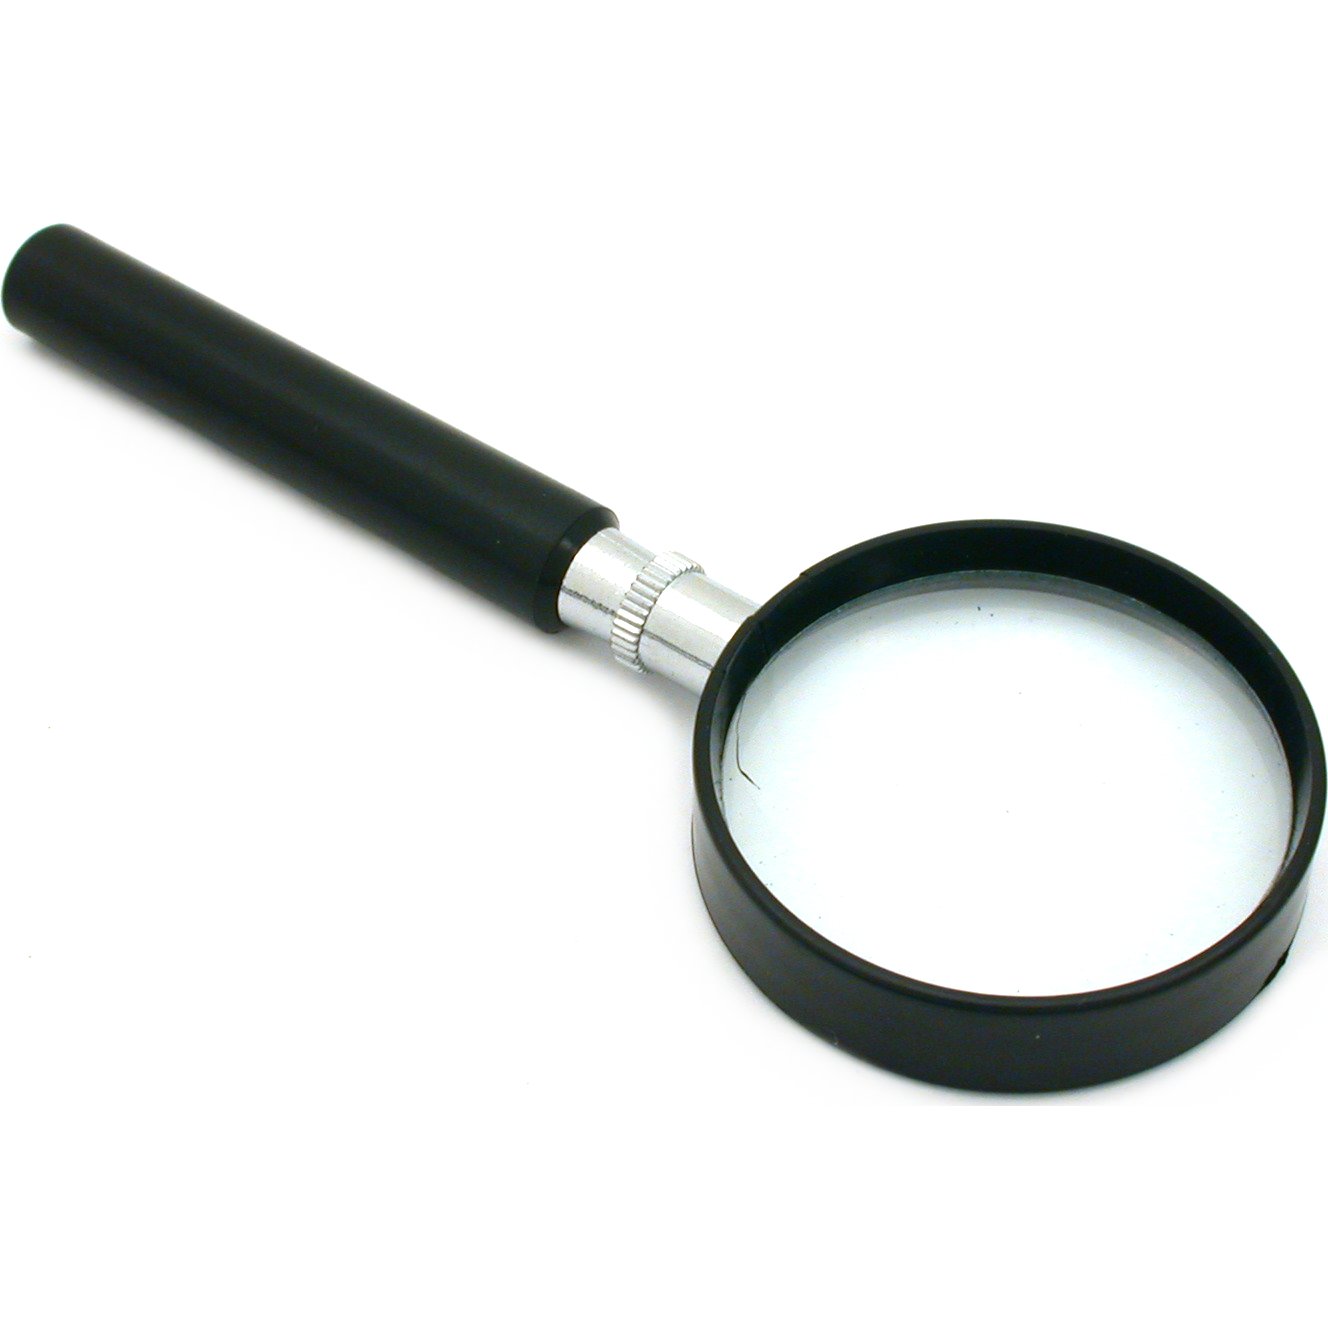 Toolusa 3.8cm Diameter, 3X Power Lens Black Handheld Magnifier: MG-28750-Z02